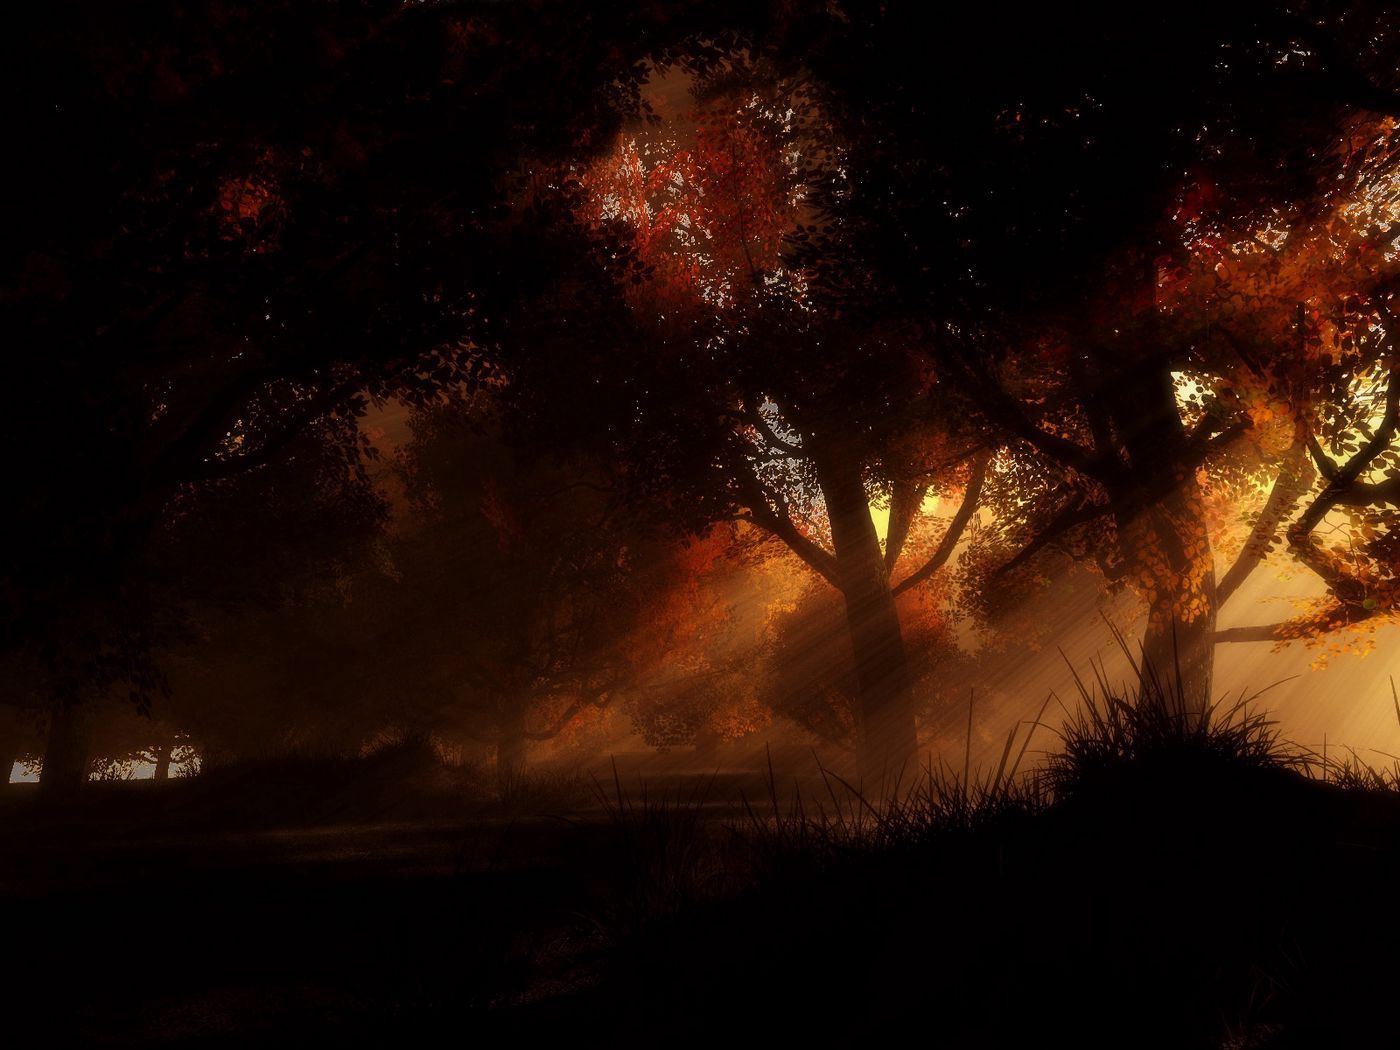 Download wallpaper 1400x1050 trees, night, autumn standard 4:3 HD background